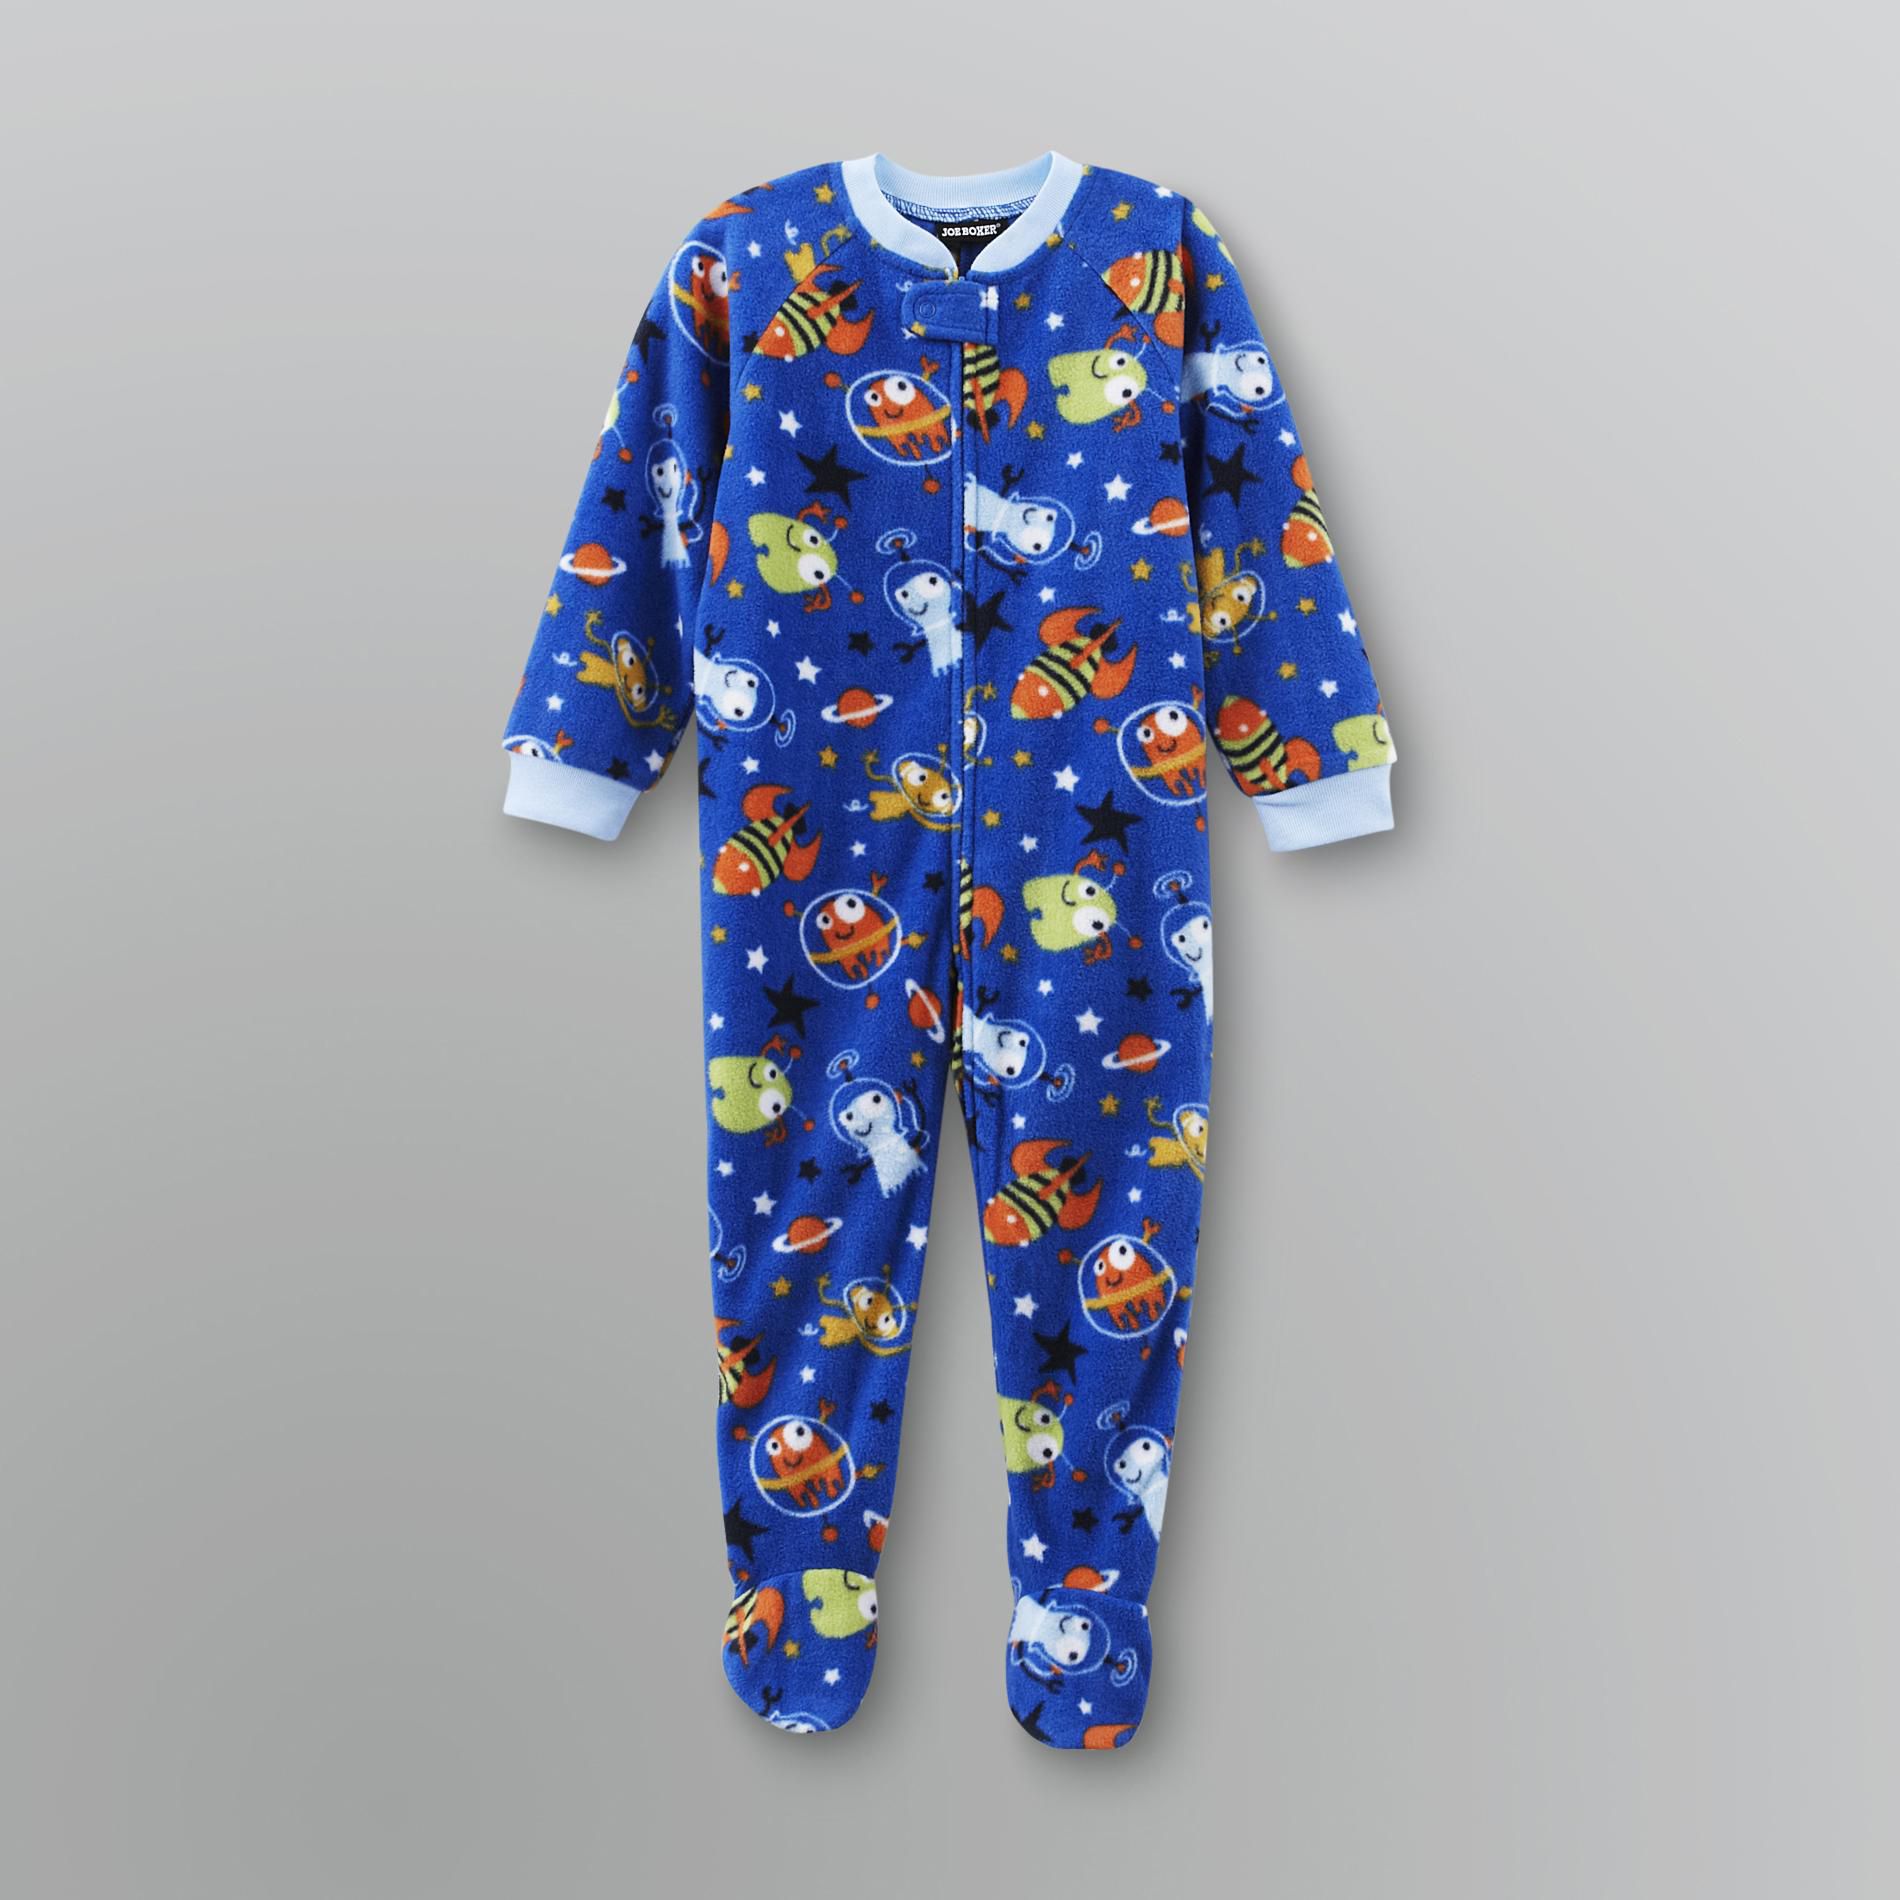 Joe Boxer Infant & Toddler Boy's Fleece Footed Pajamas - Rockets